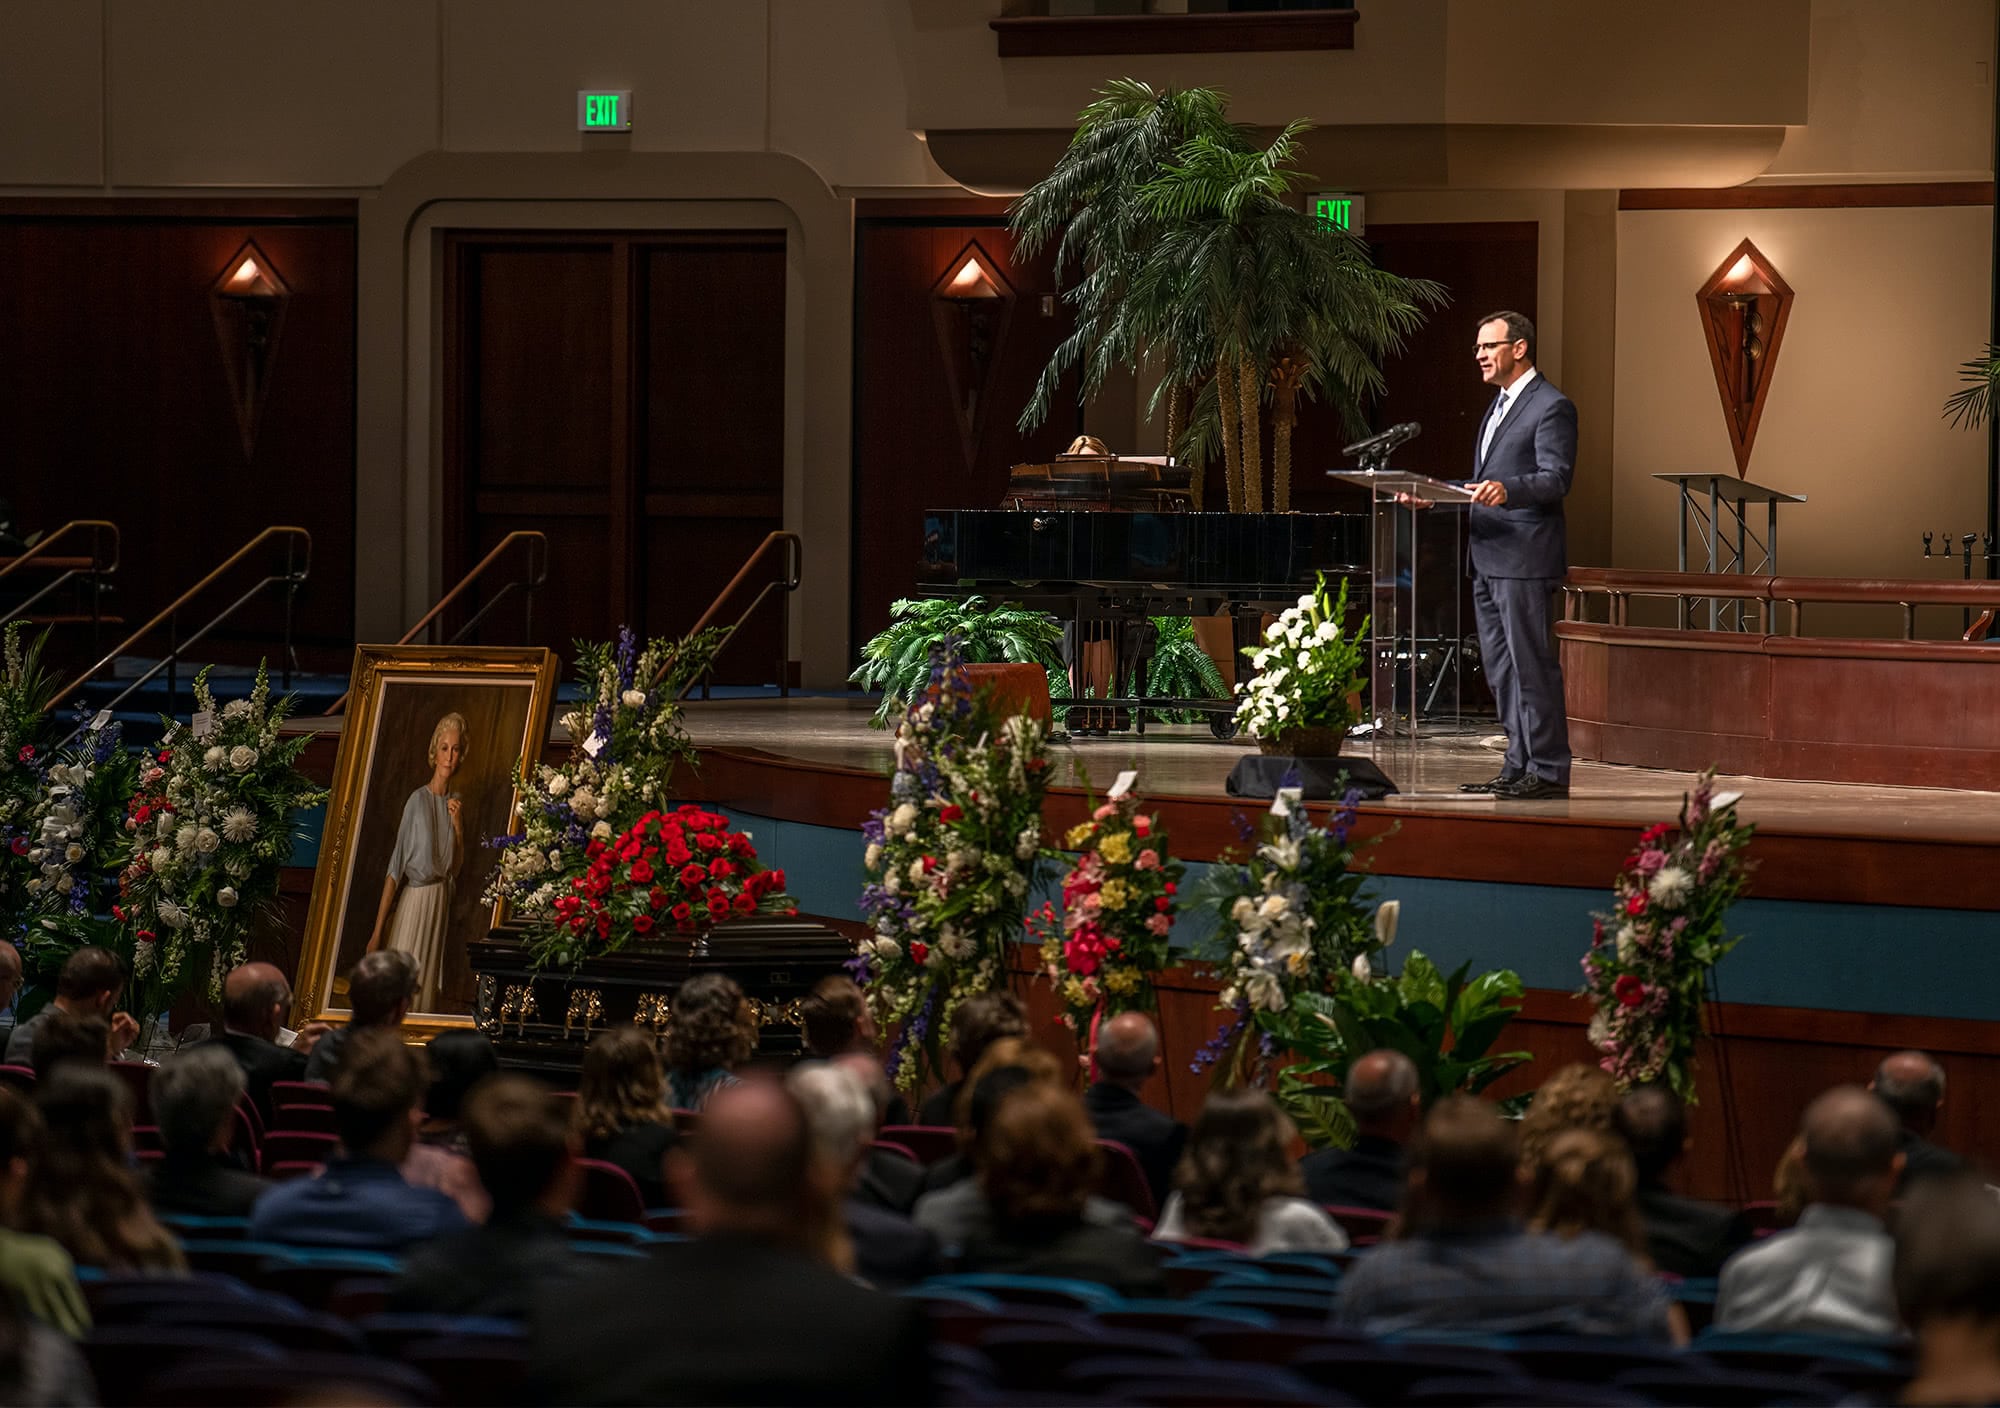 Pastor Redlin speaking on stage at the memorial. 